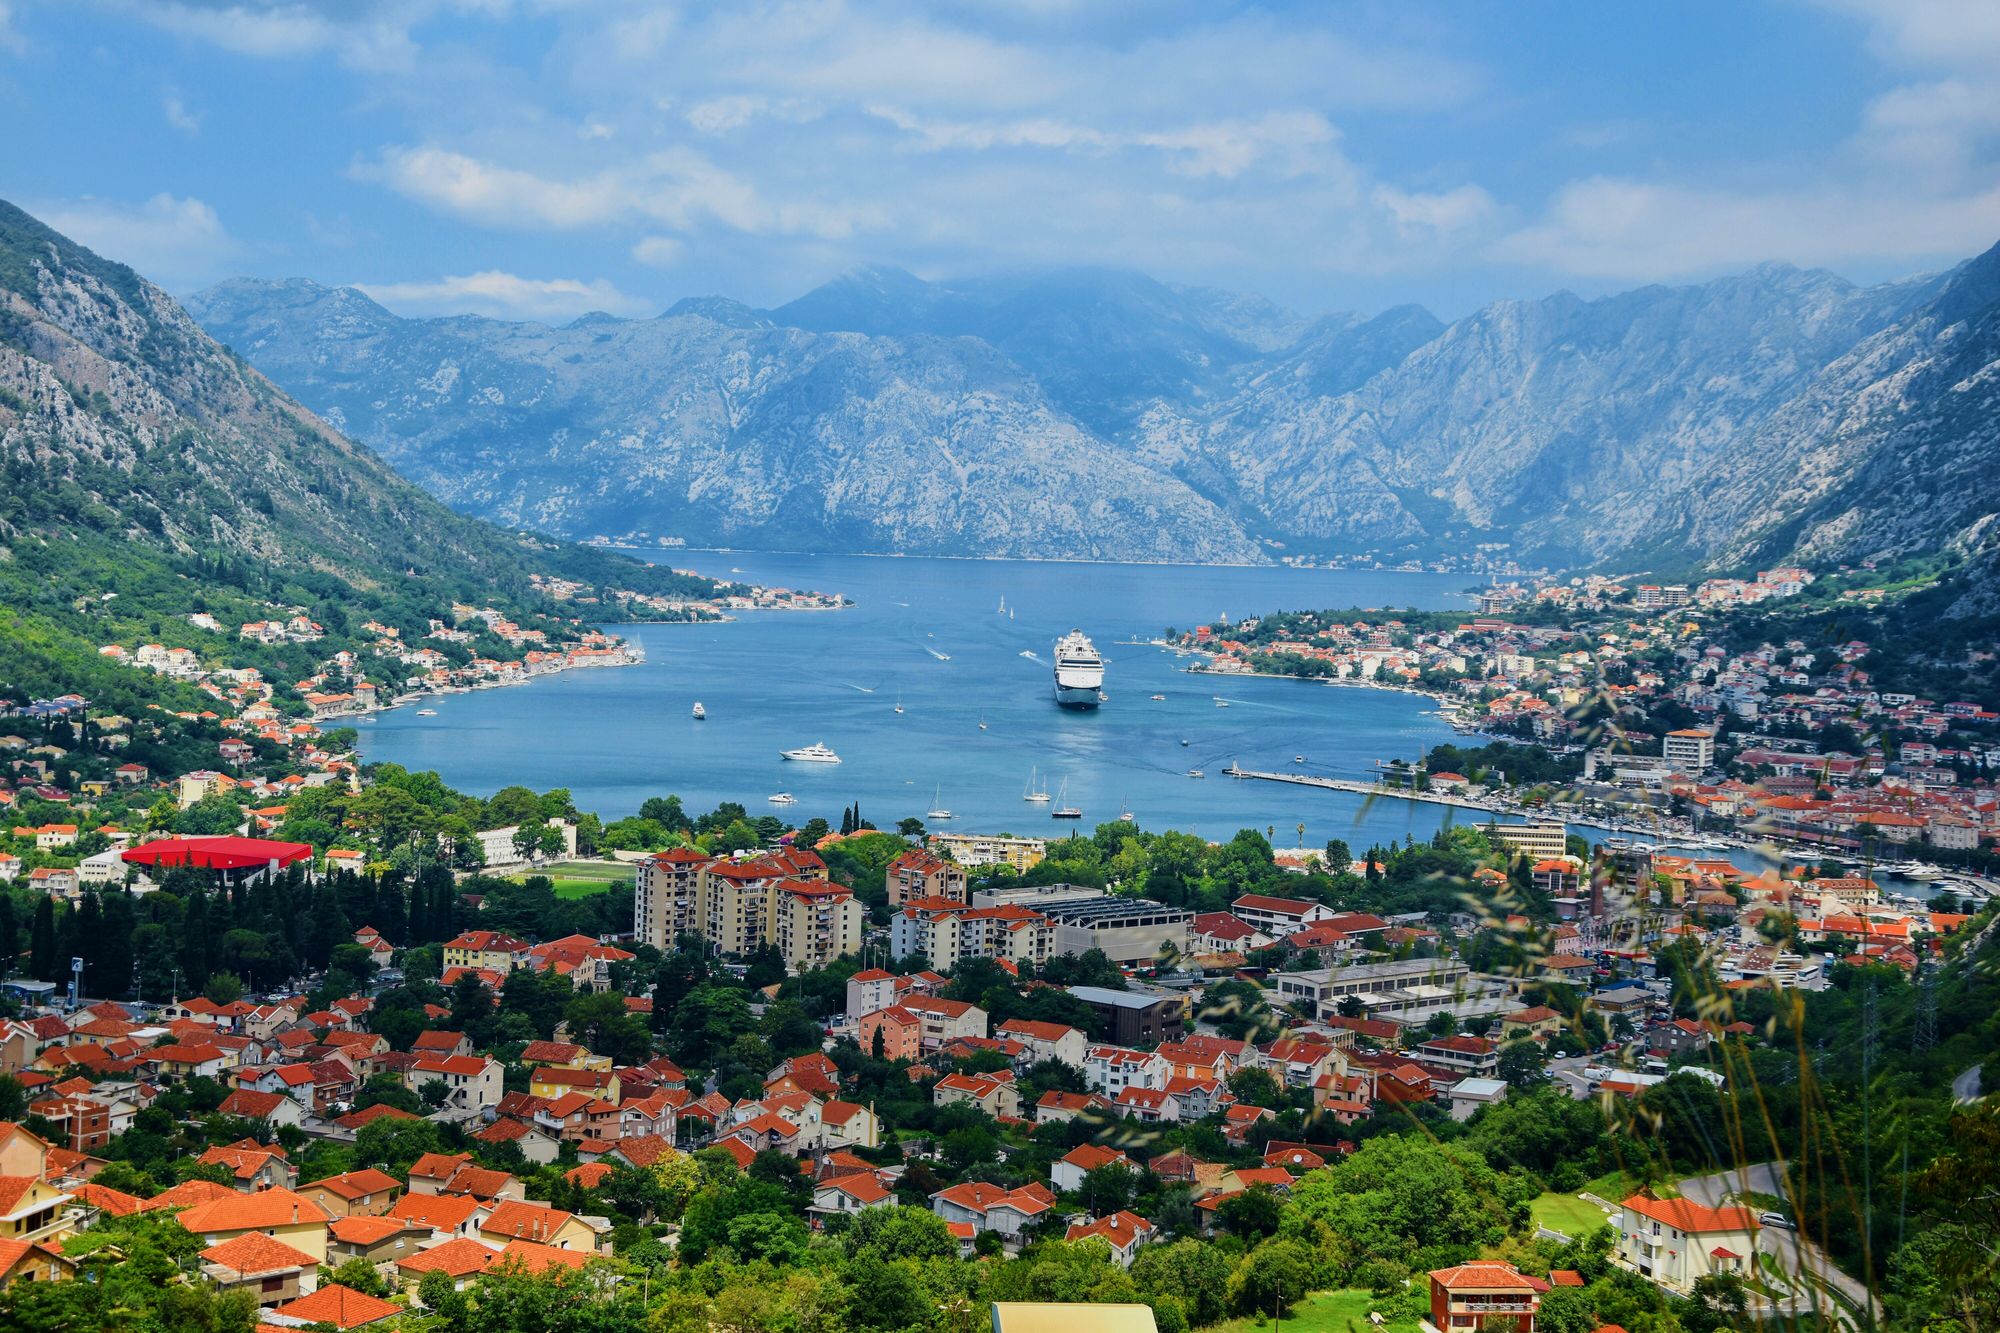 The Bay of Kotor in Montenegro